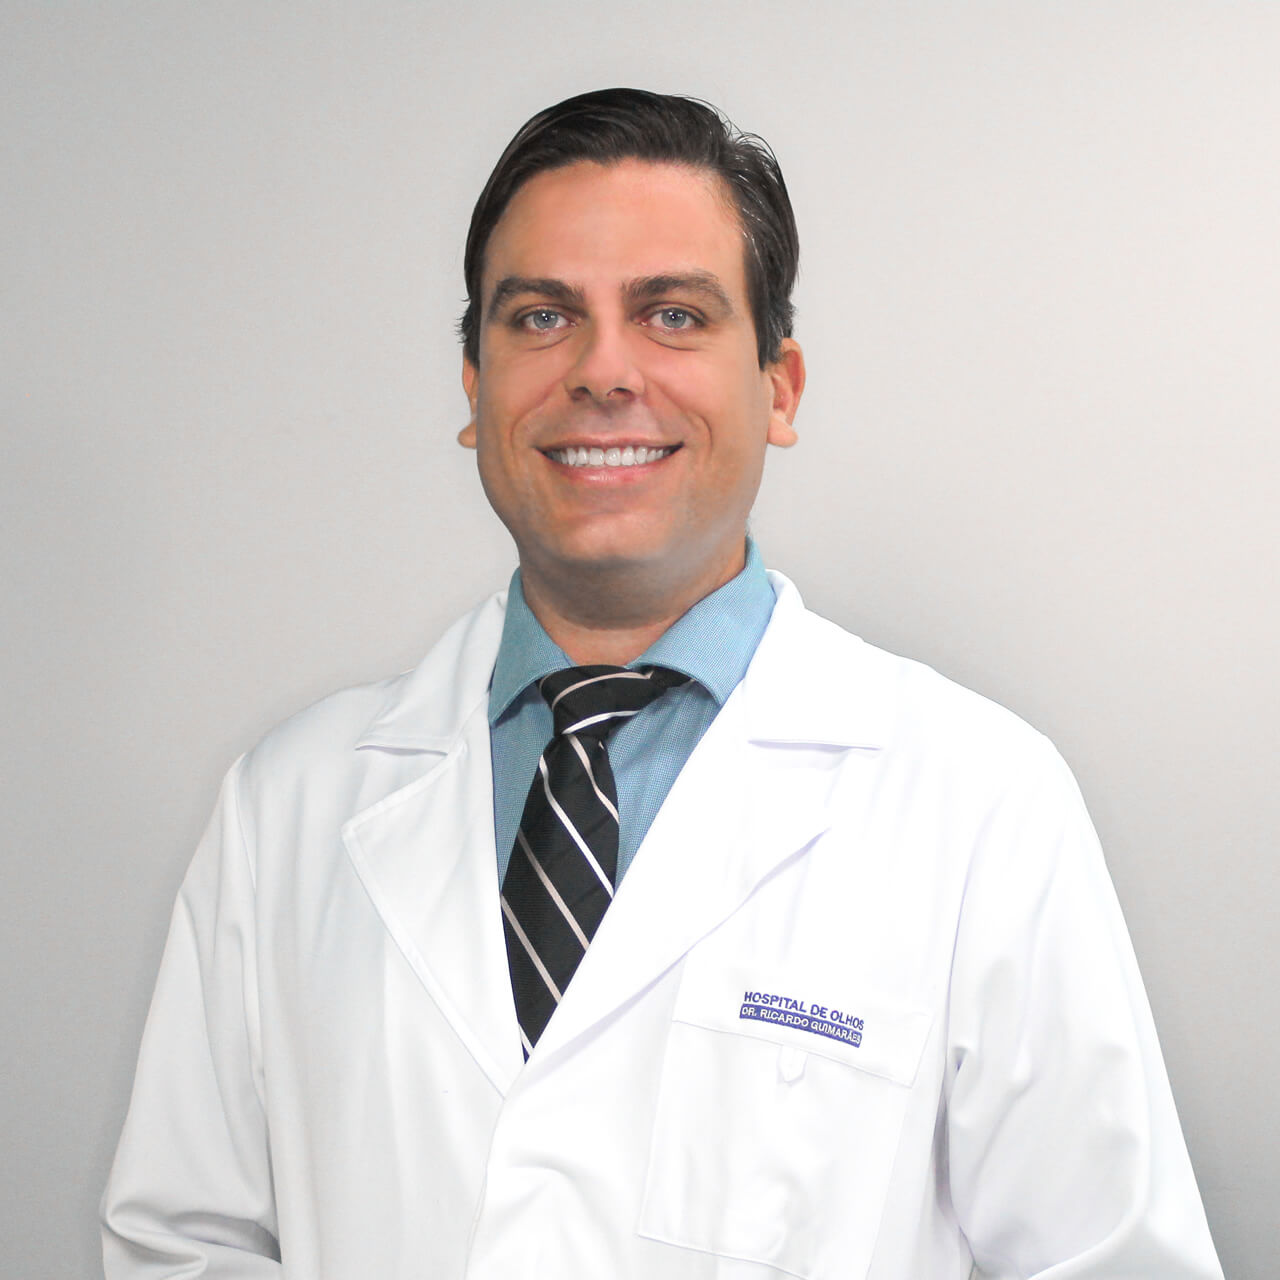 Dr. Rubens Andrade Grochowski